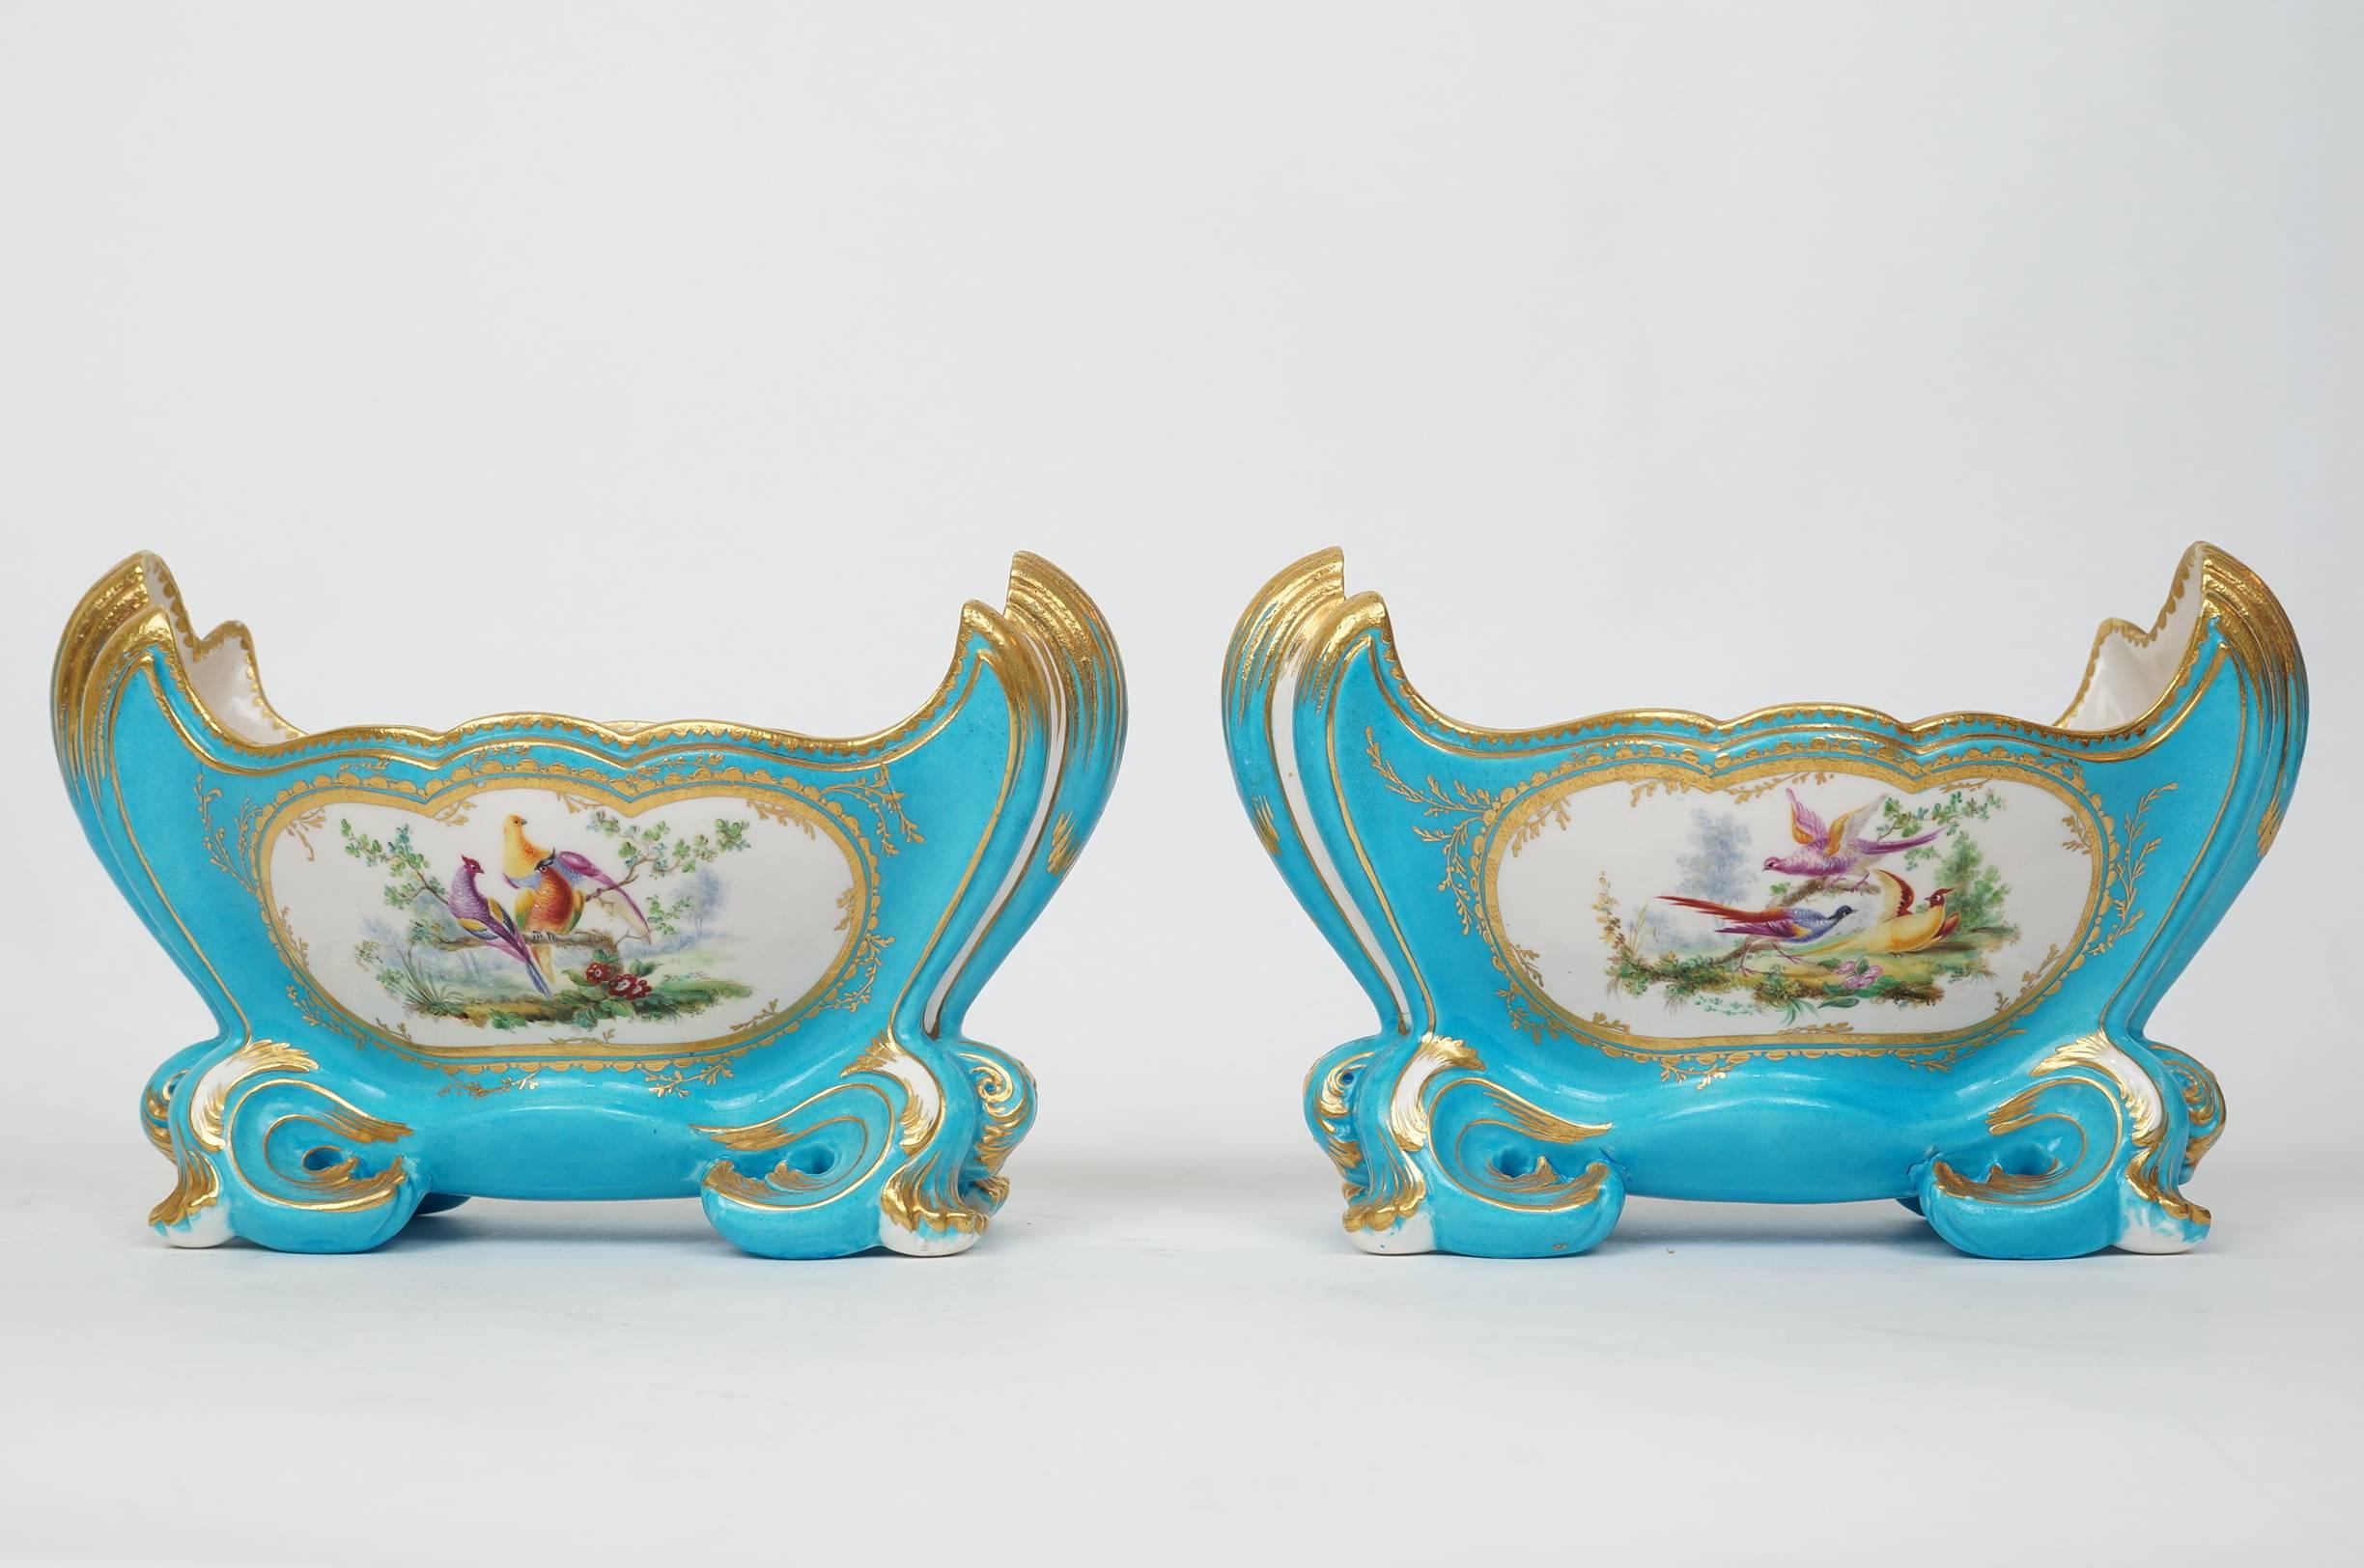 Pair of Celeste Light Blue Porcelain Cache Pots with Painted Bird Scenes
Stock Number: DA100